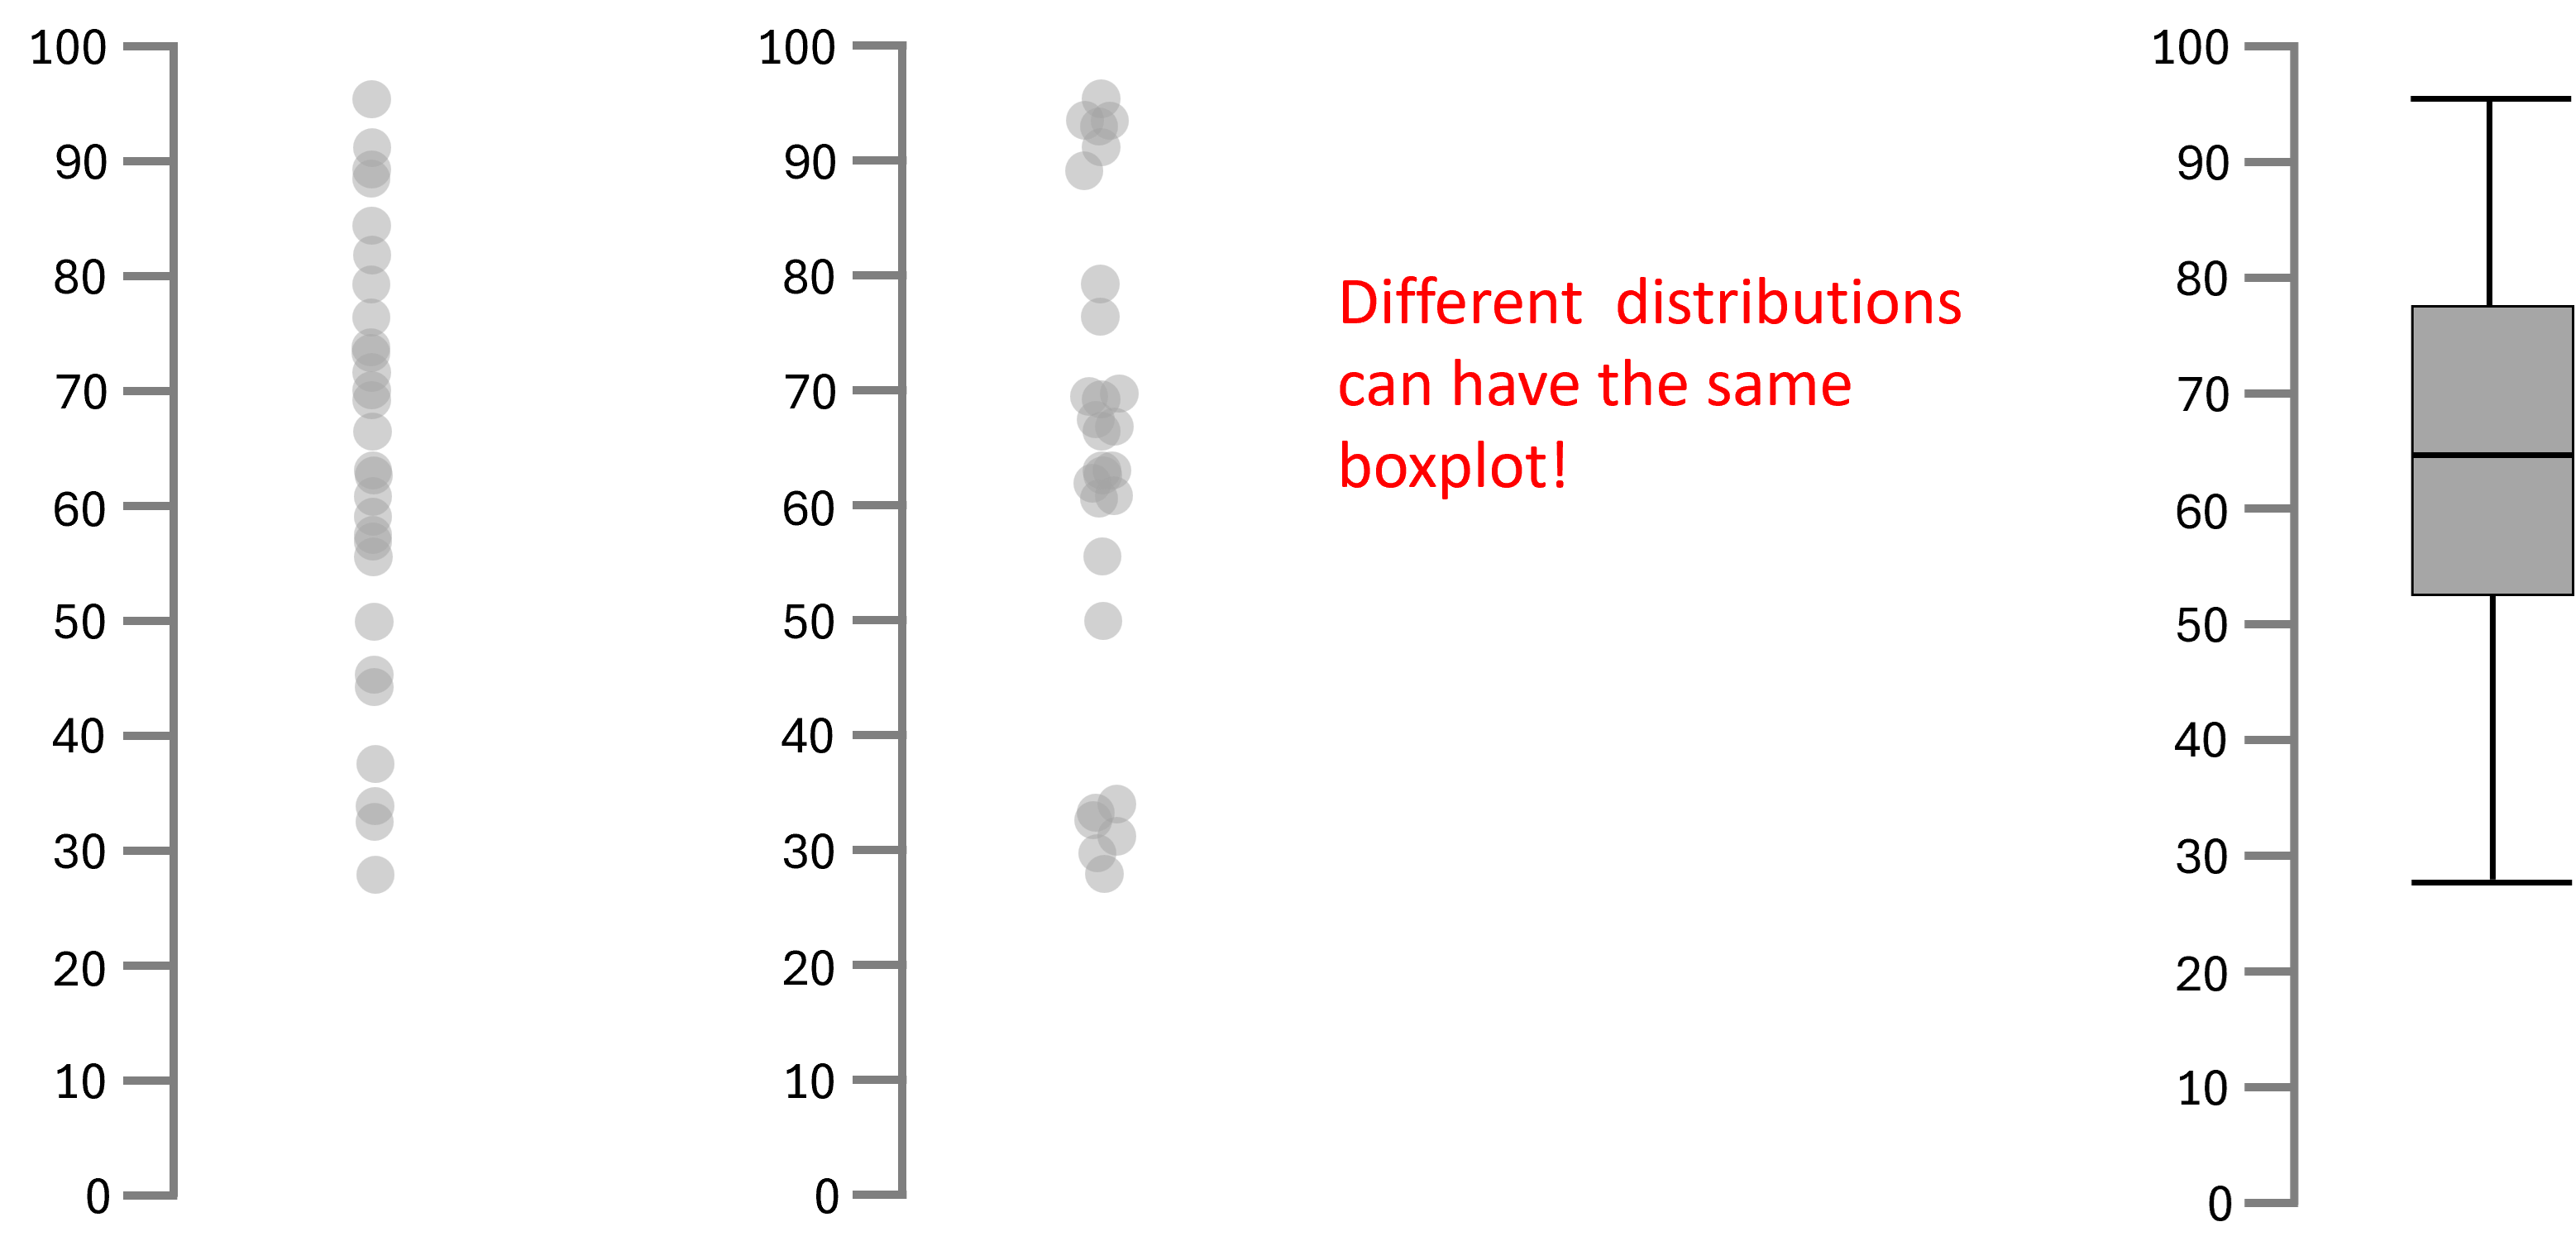 identical-boxplots-representing-misinterpretation